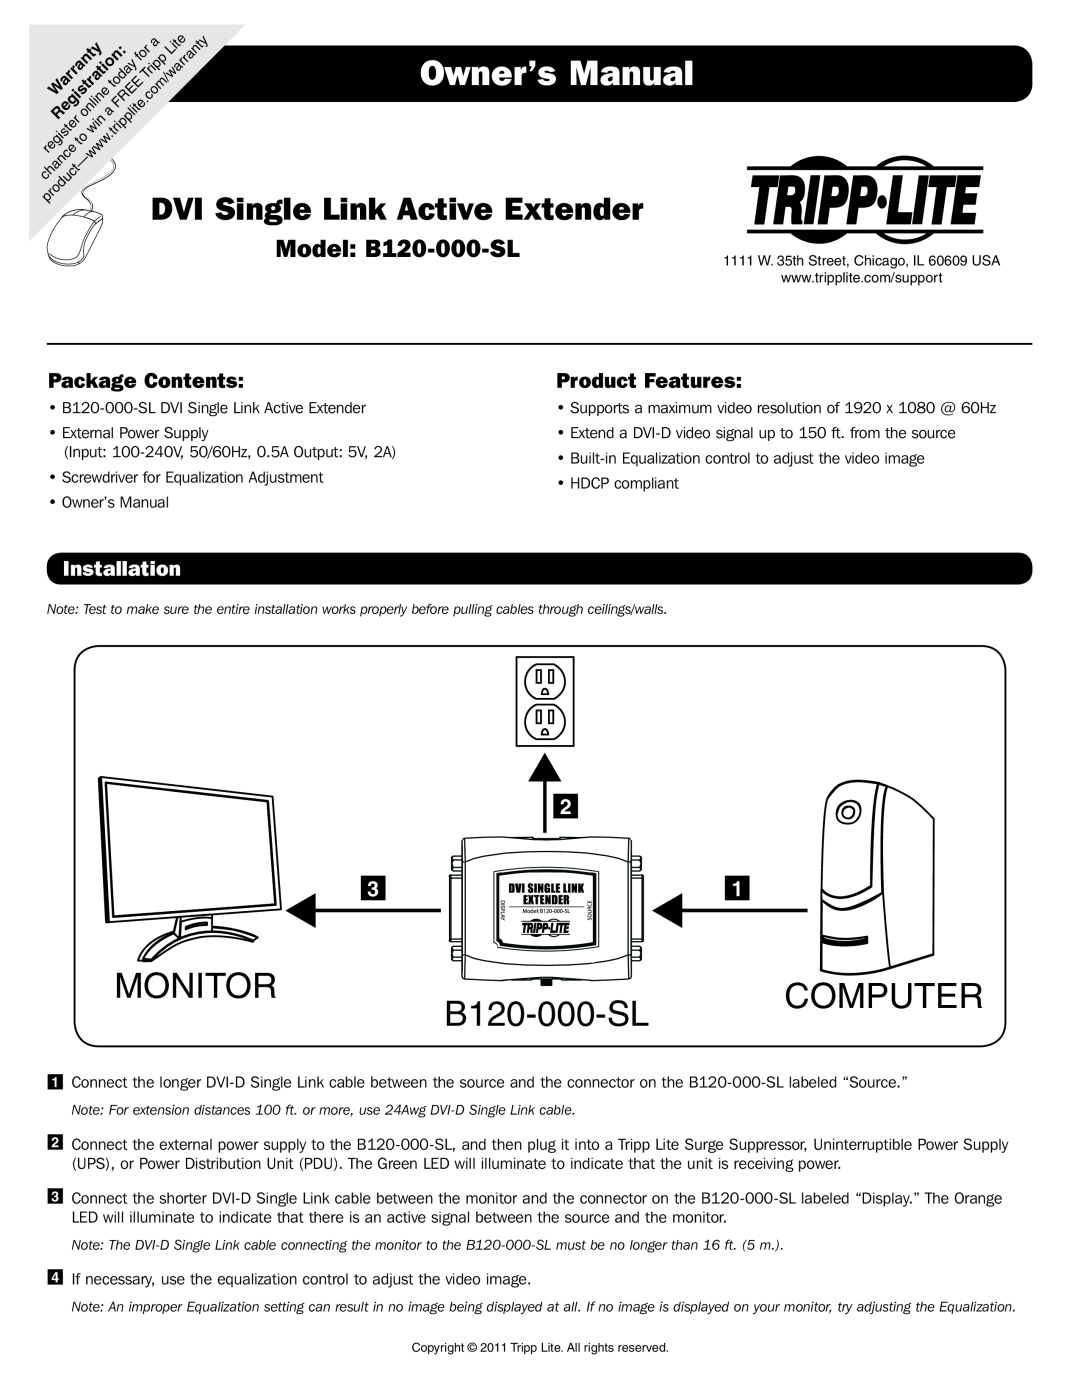 Tripp Lite warranty Installation, Owner’s Manual, MONITOR B120-000-SL COMPUTER, DVI Single Link Active Extender 